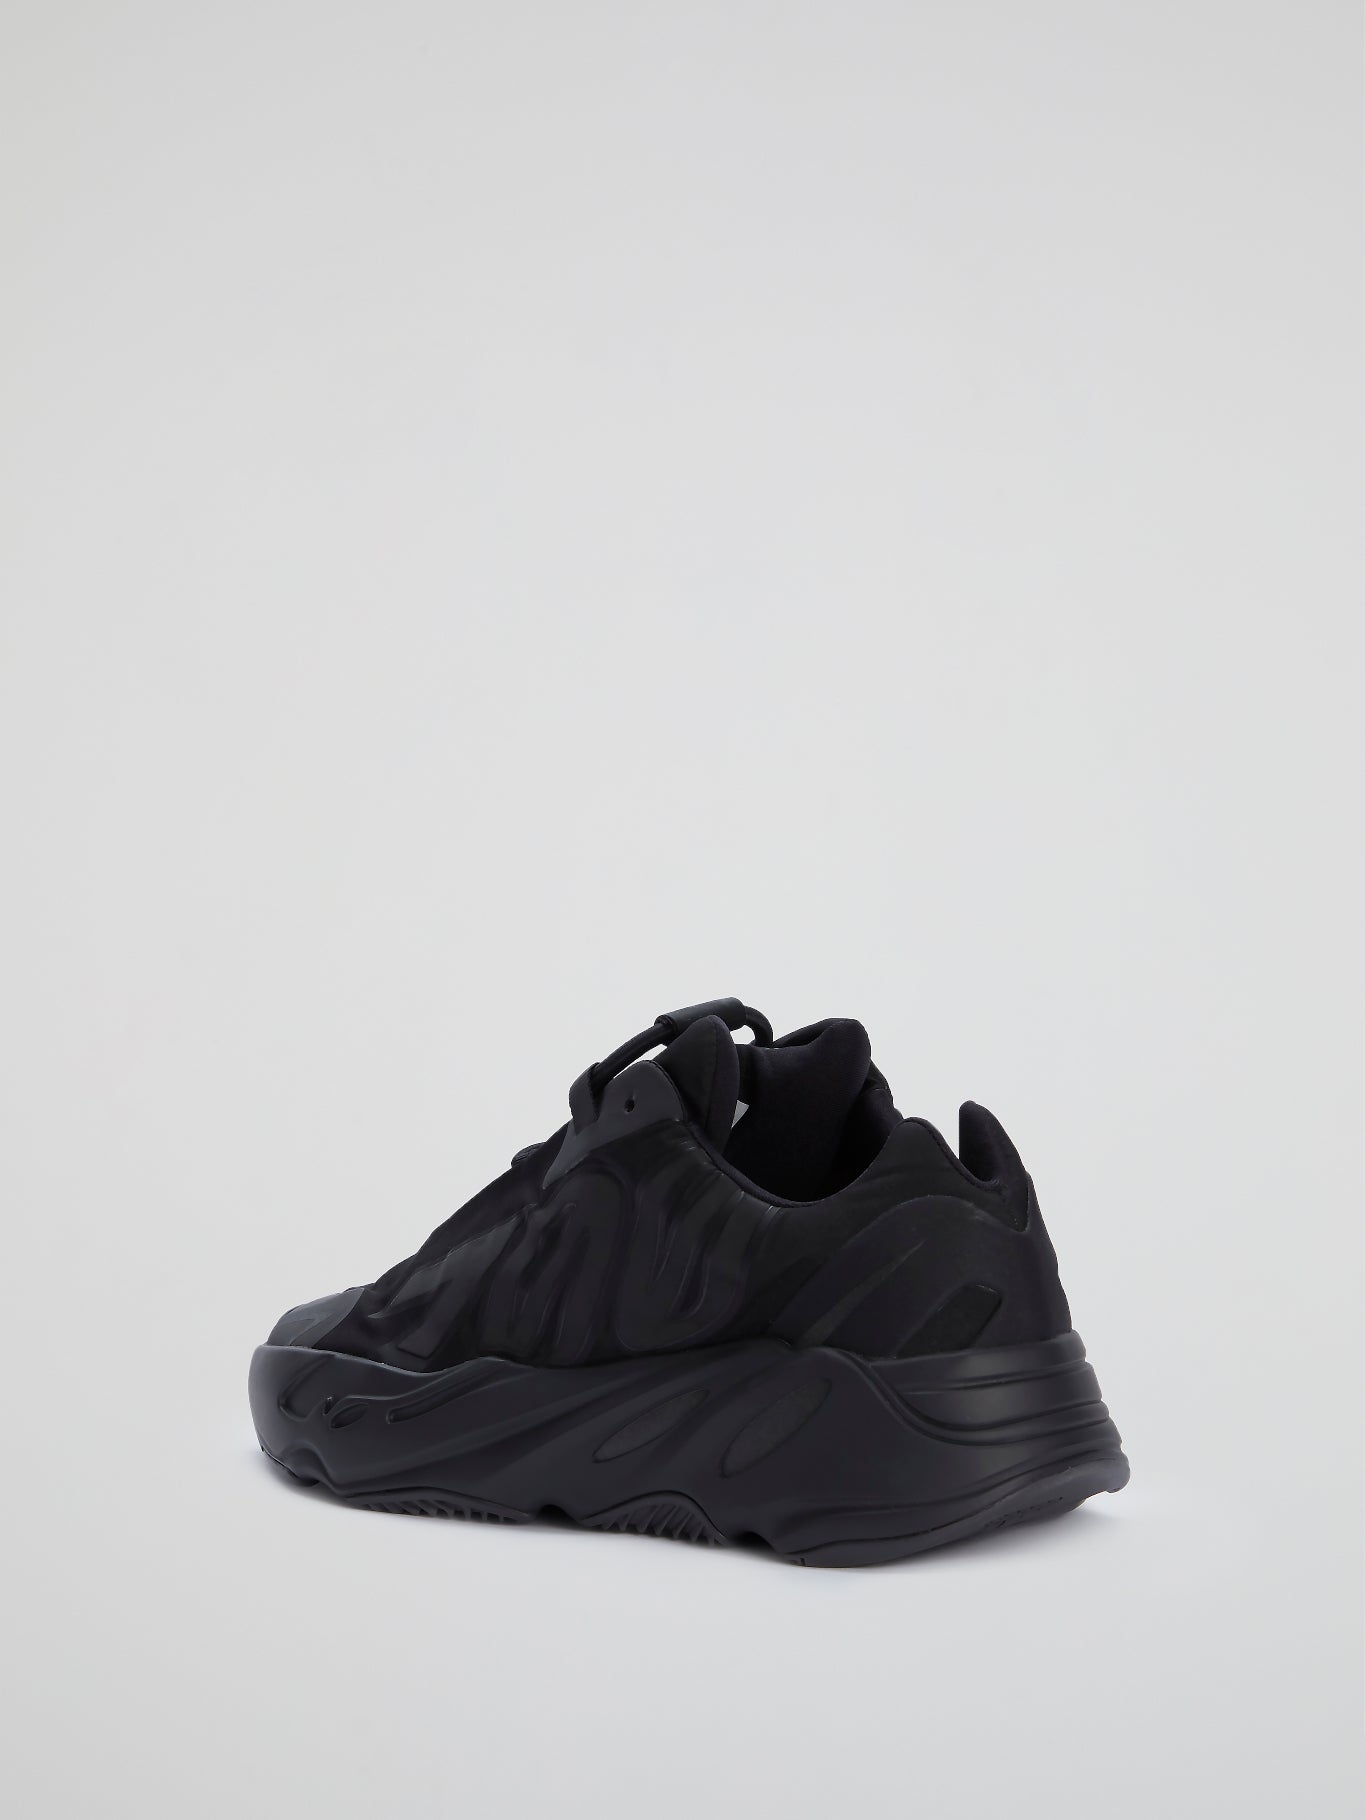 Yeezy Boost 700 MNVN Black Sneakers